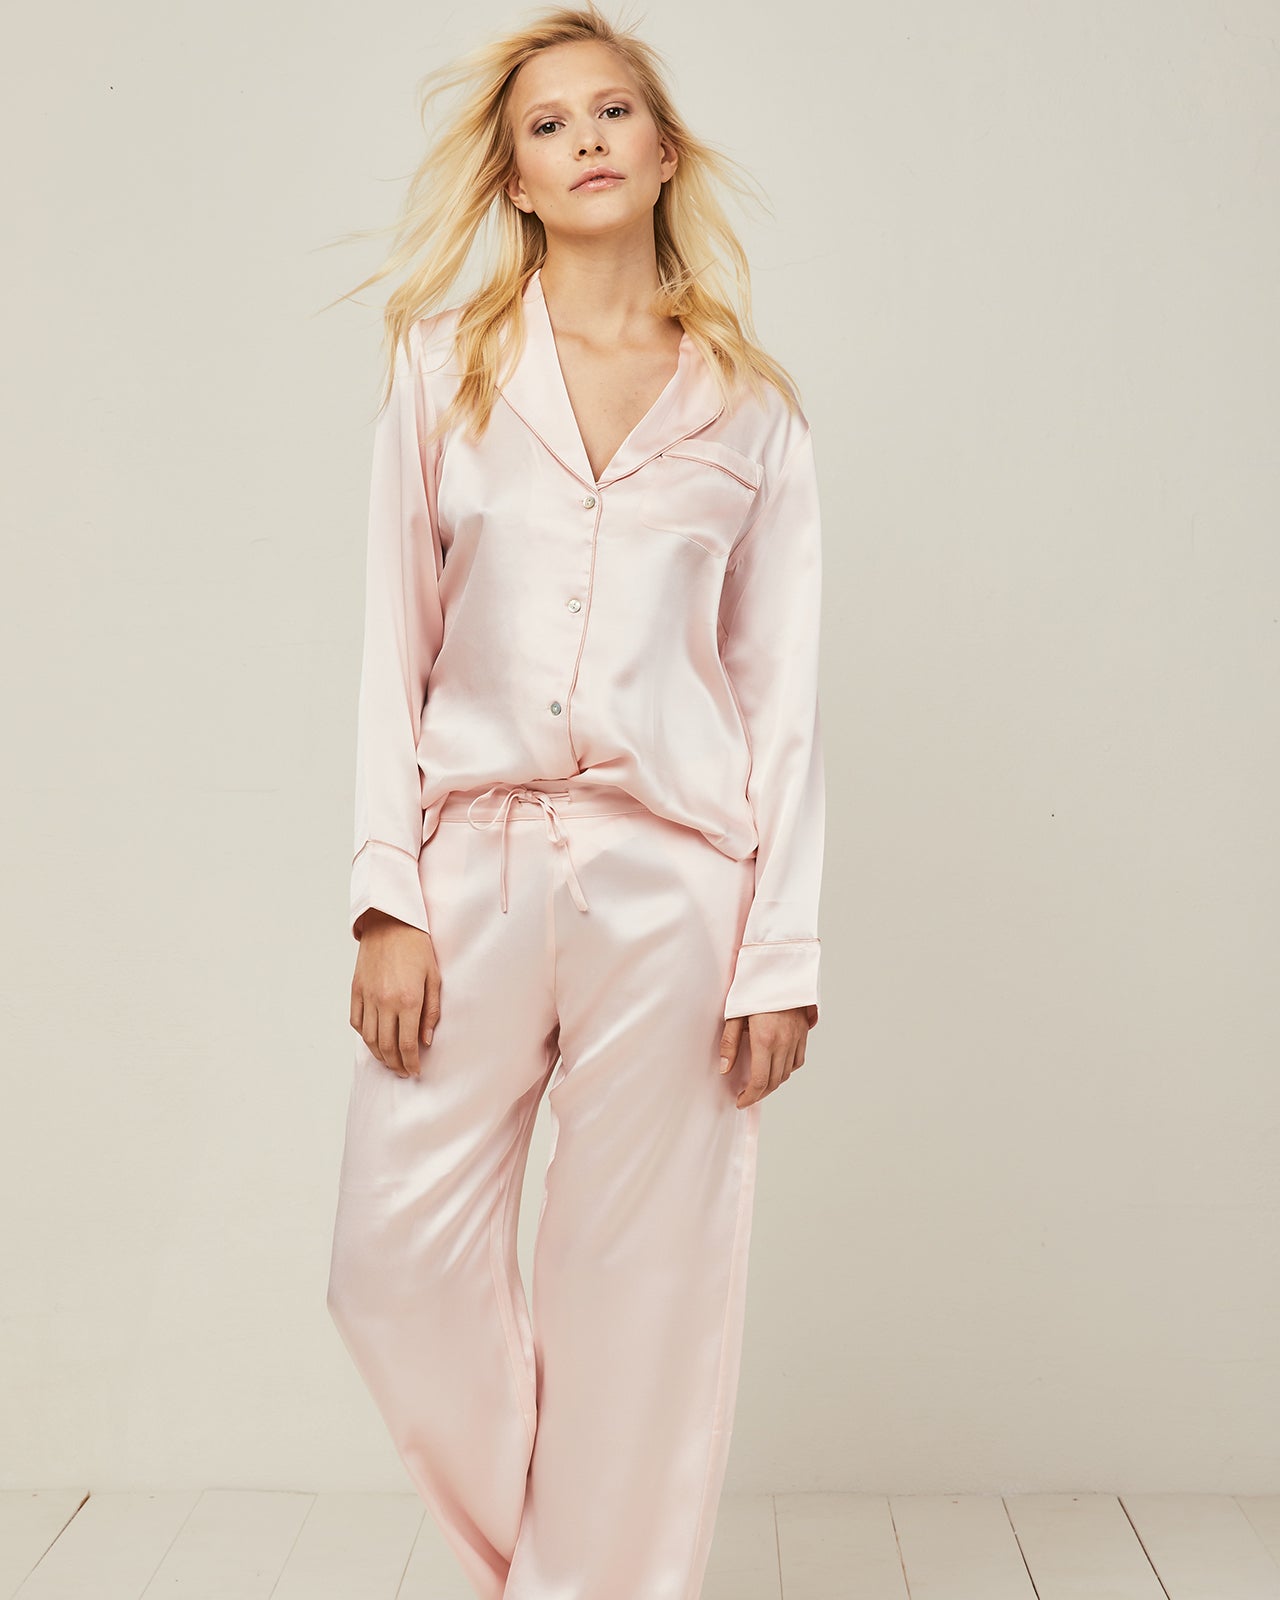 Elisabetha Silk Pyjama in Candy Rose - Bottom